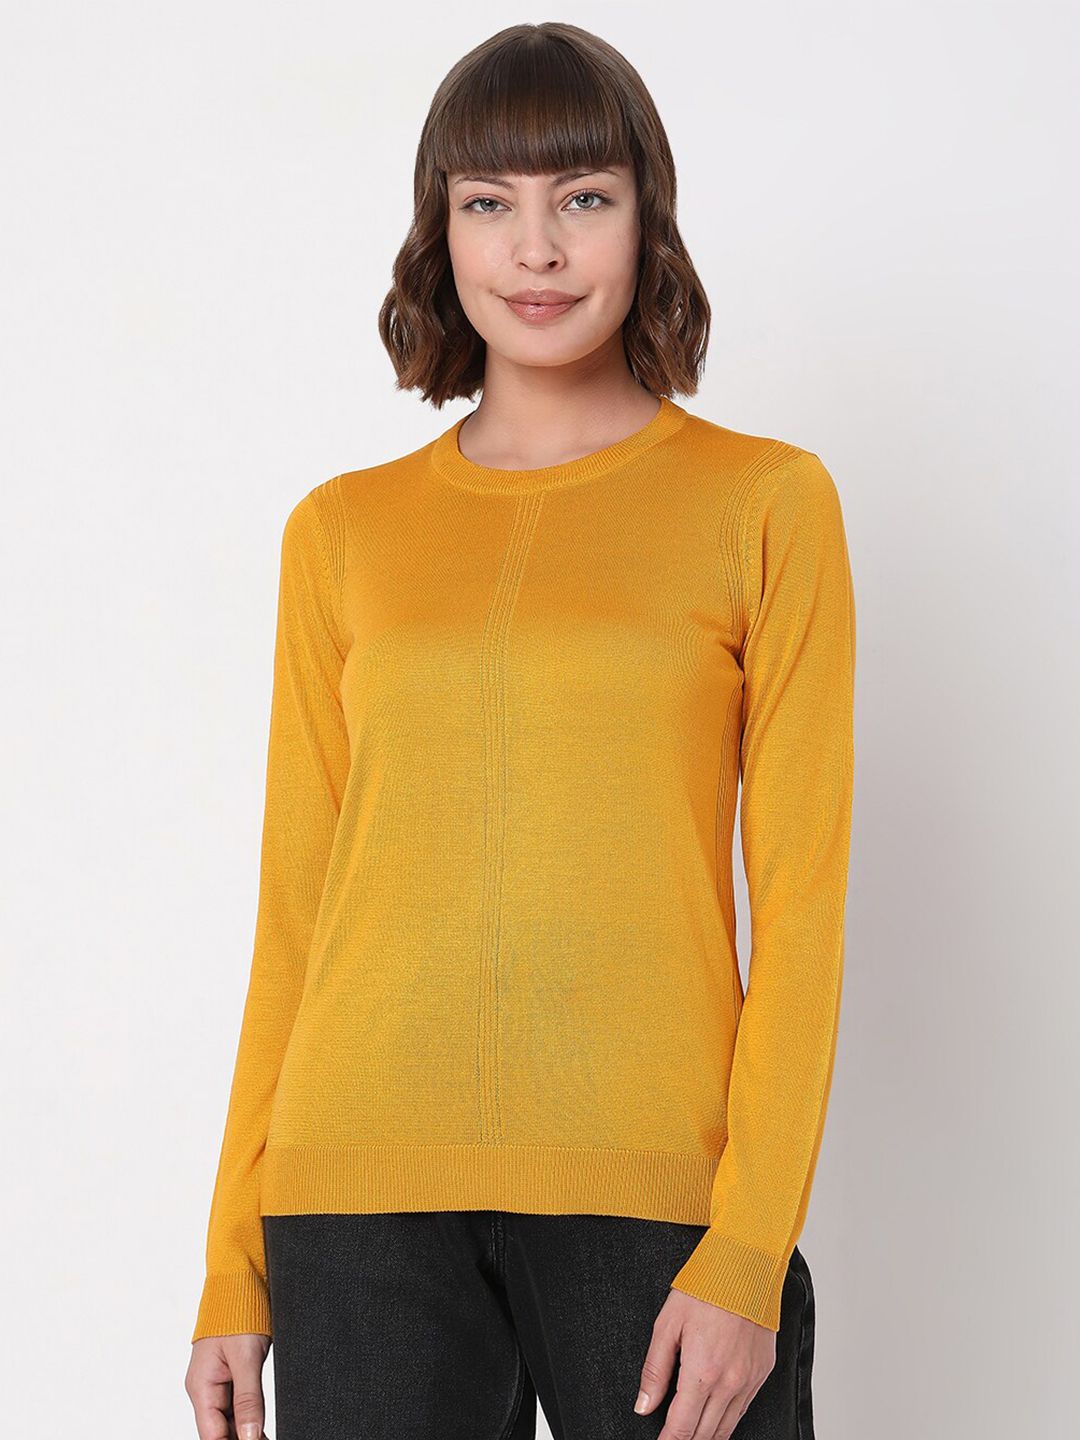 Vero Moda Women Yellow Sweater Vest Price in India